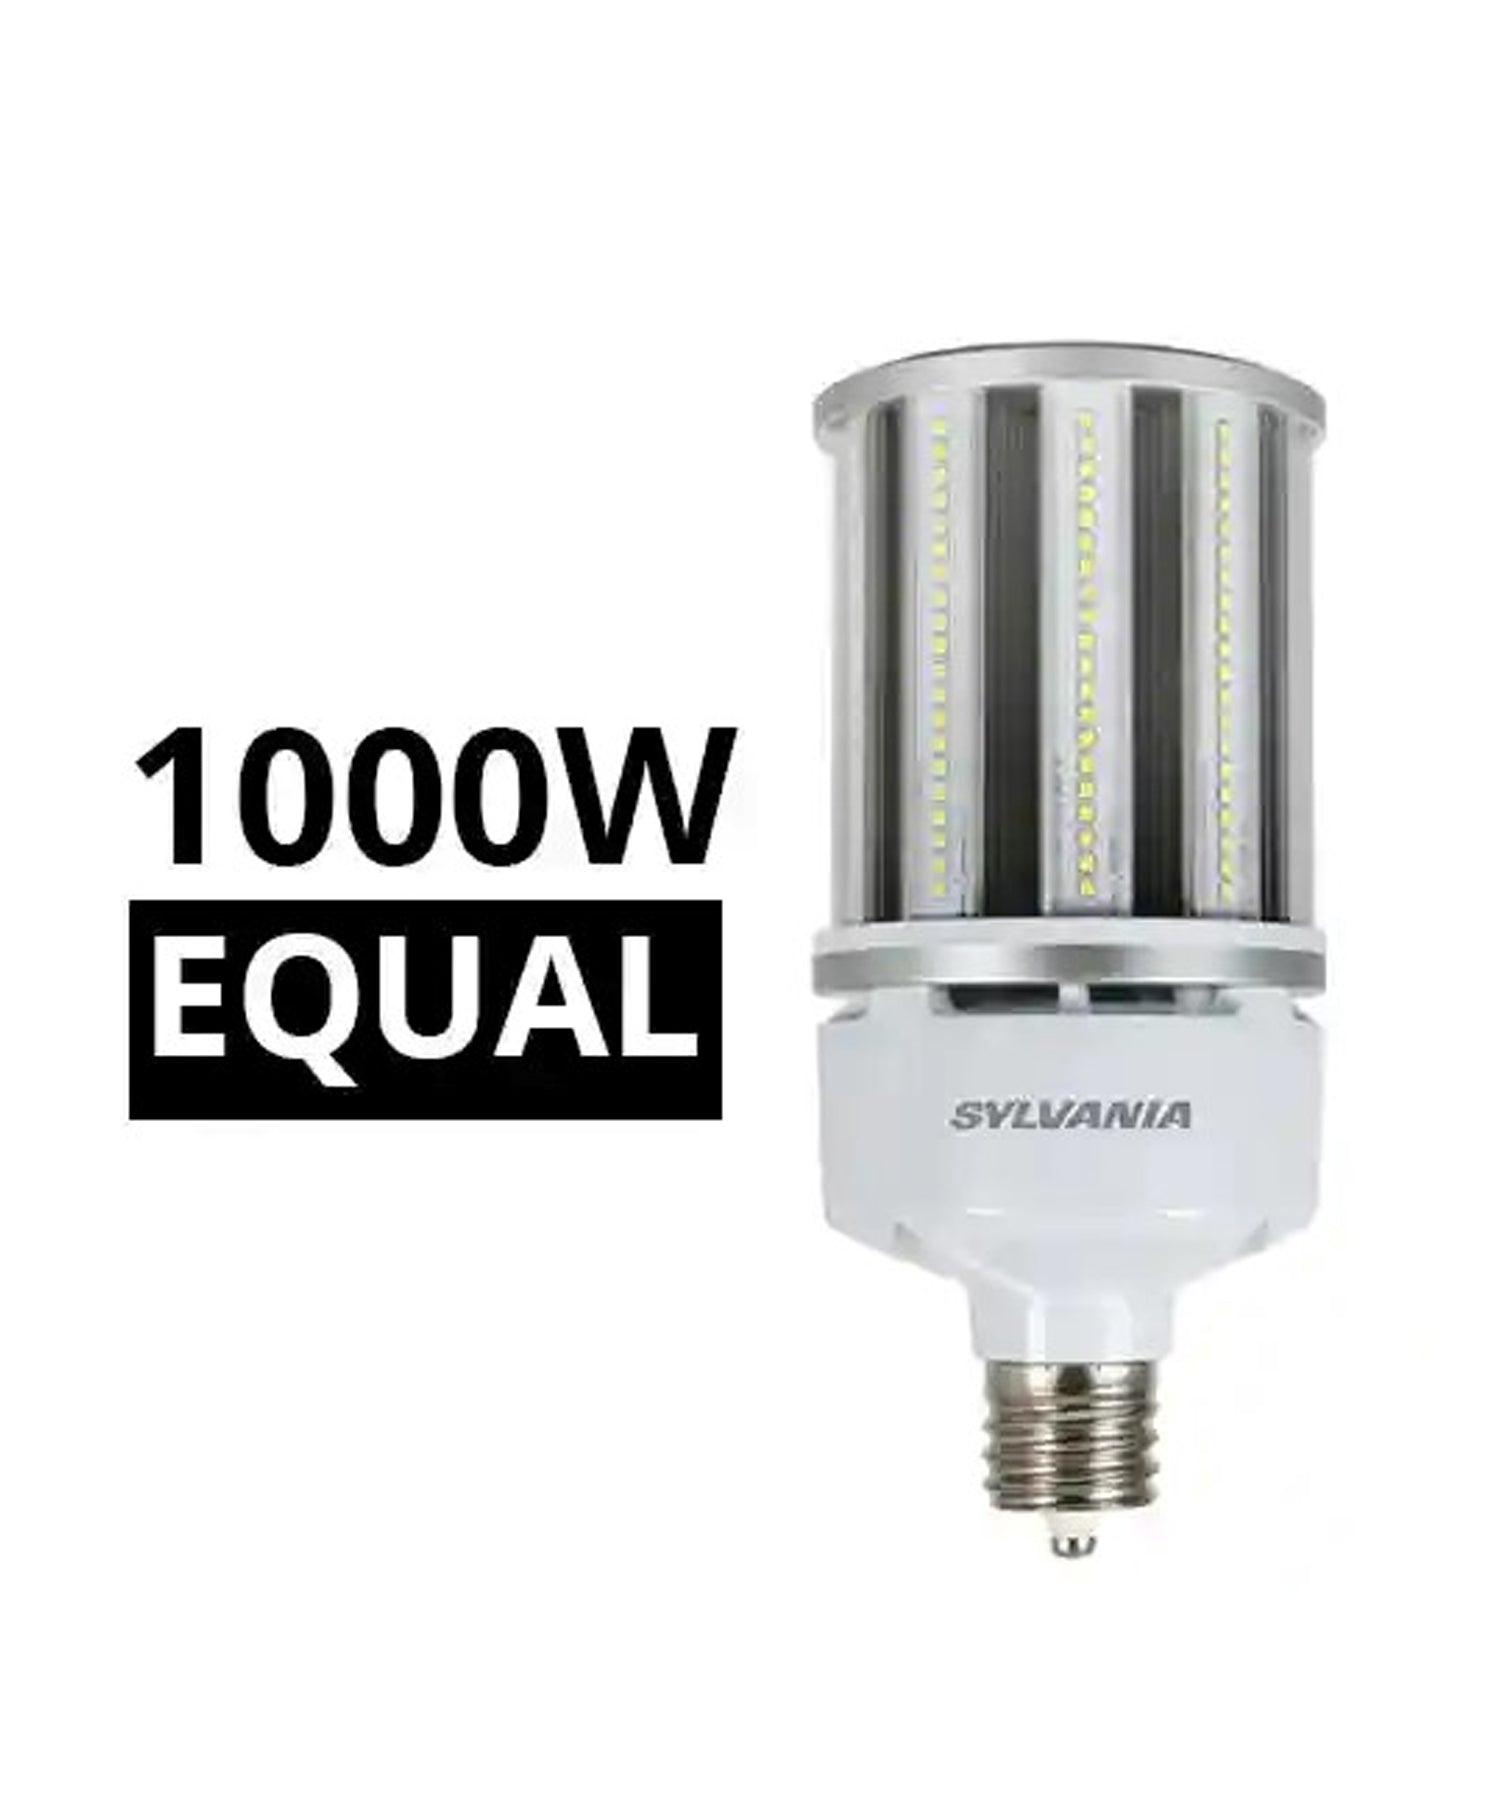 1000W MH Equal LED HID Retrofit Bulbs - Bees Lighting